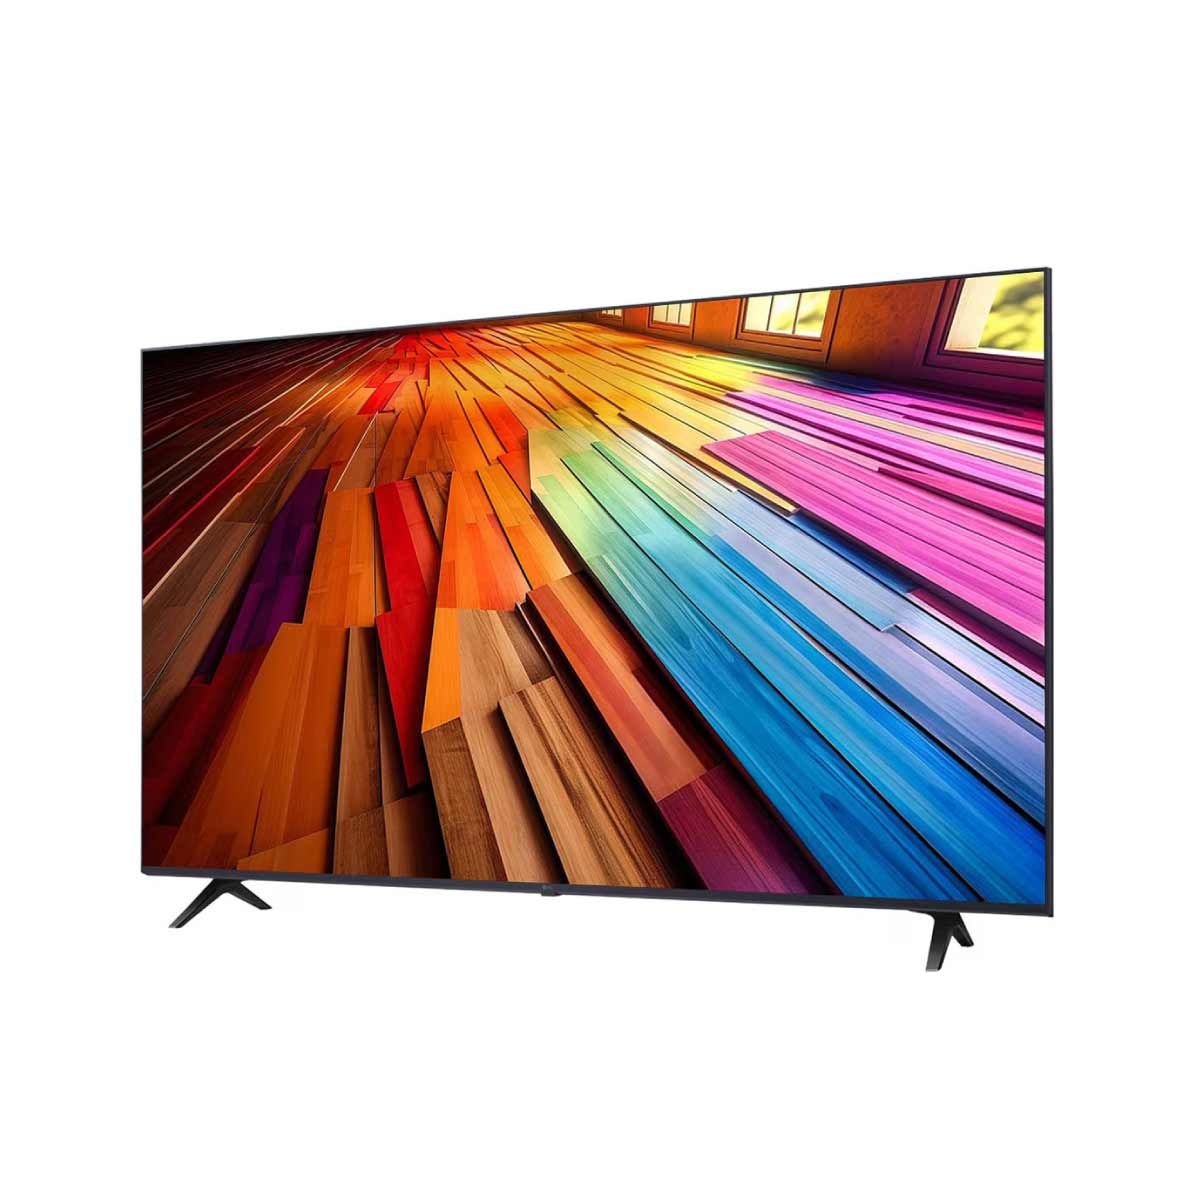 LG UHD Smart TV 4K 2024 รุ่น 65UT8050PSB สมาร์ททีวีขนาด 65 นิ้ว